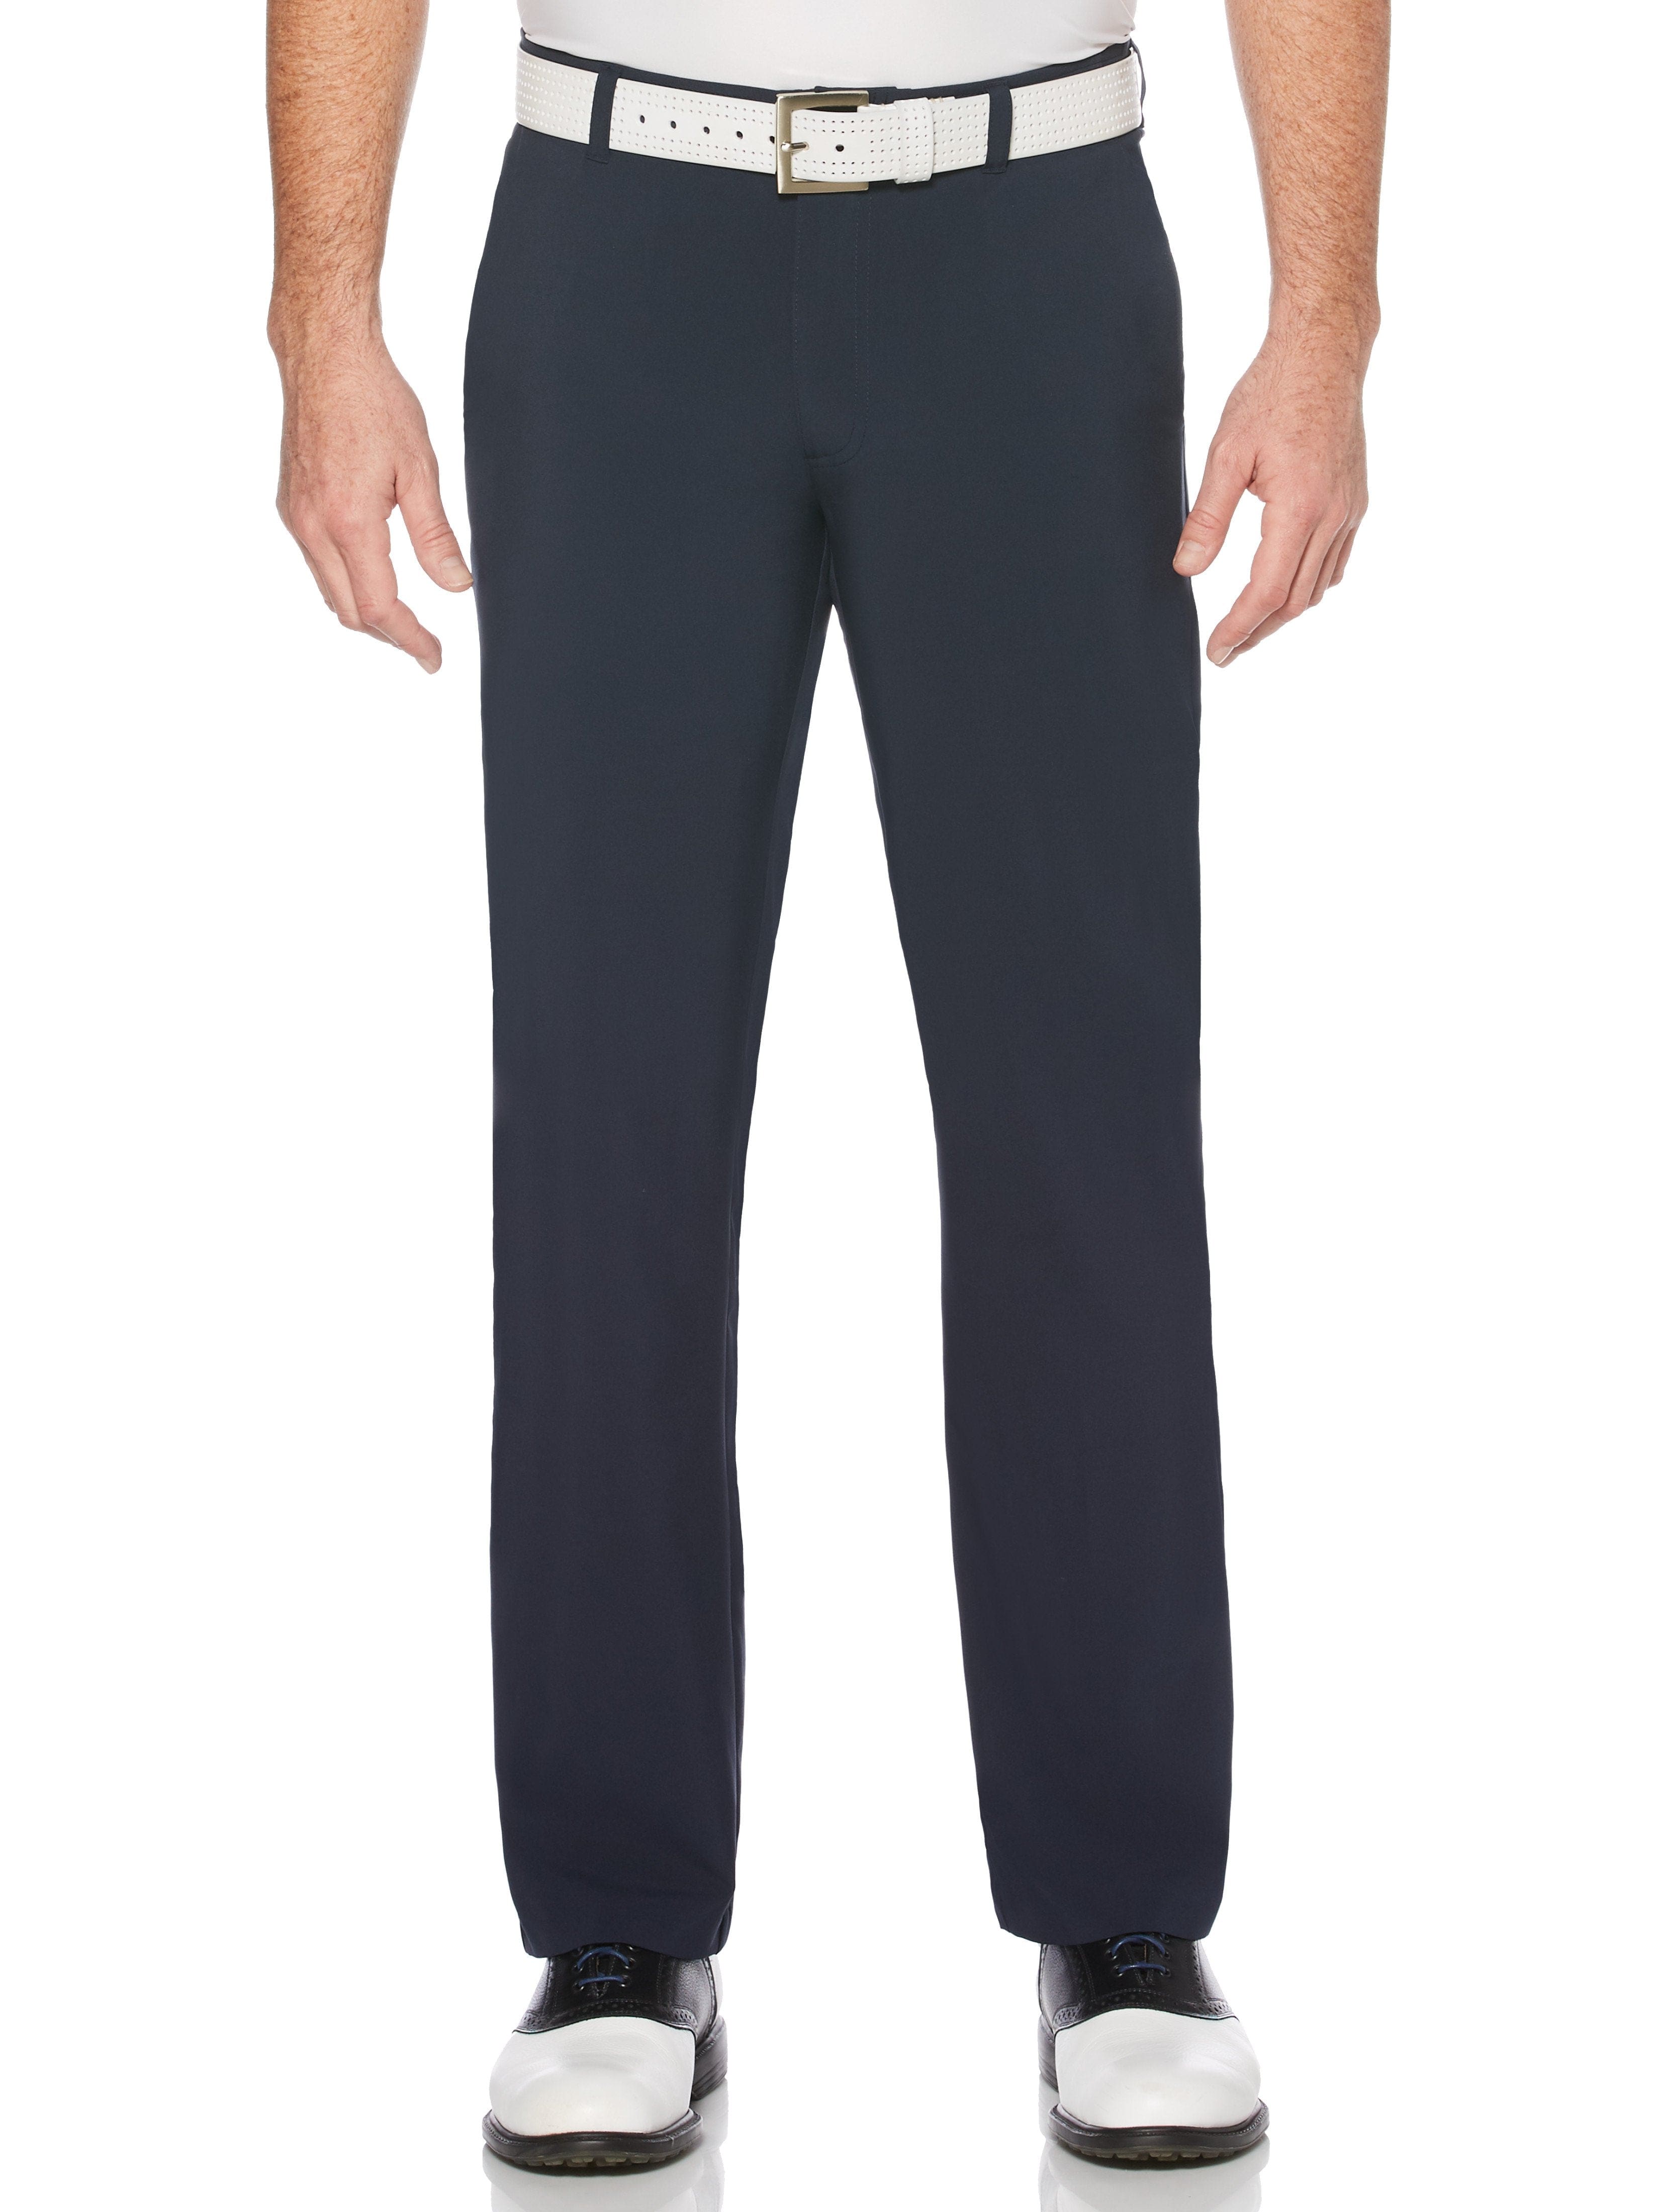 Jack Nicklaus Mens Flat Front Active Flex Pants, Size 40 x 32, Classic Navy Blue, Polyester/Elastane | Golf Apparel Shop